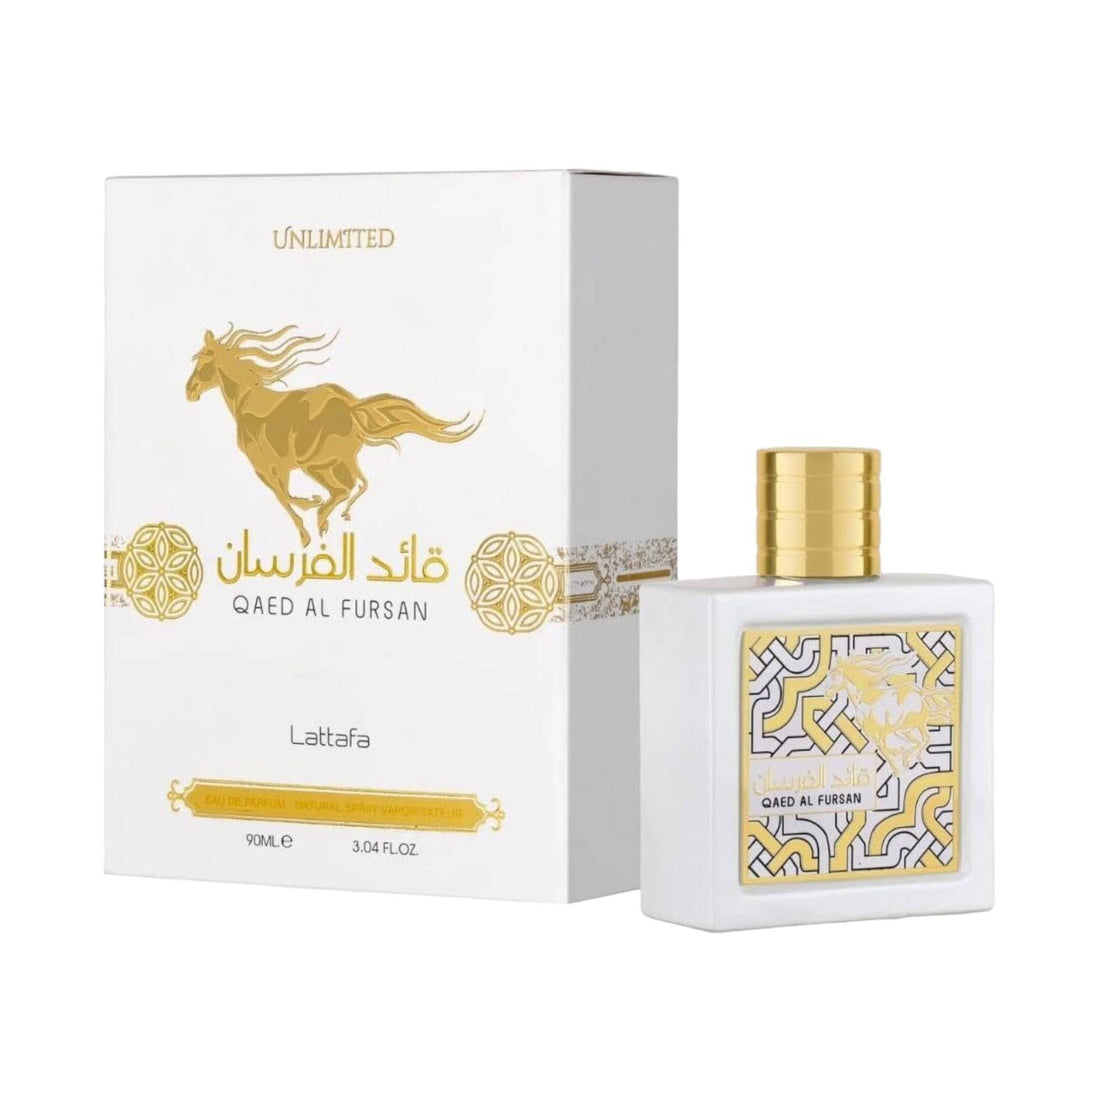 Elegant bottle of Lattafa Qaed Al Fursan Unlimited, showcasing its simplicity and the soft, succulent fragrance it holds.